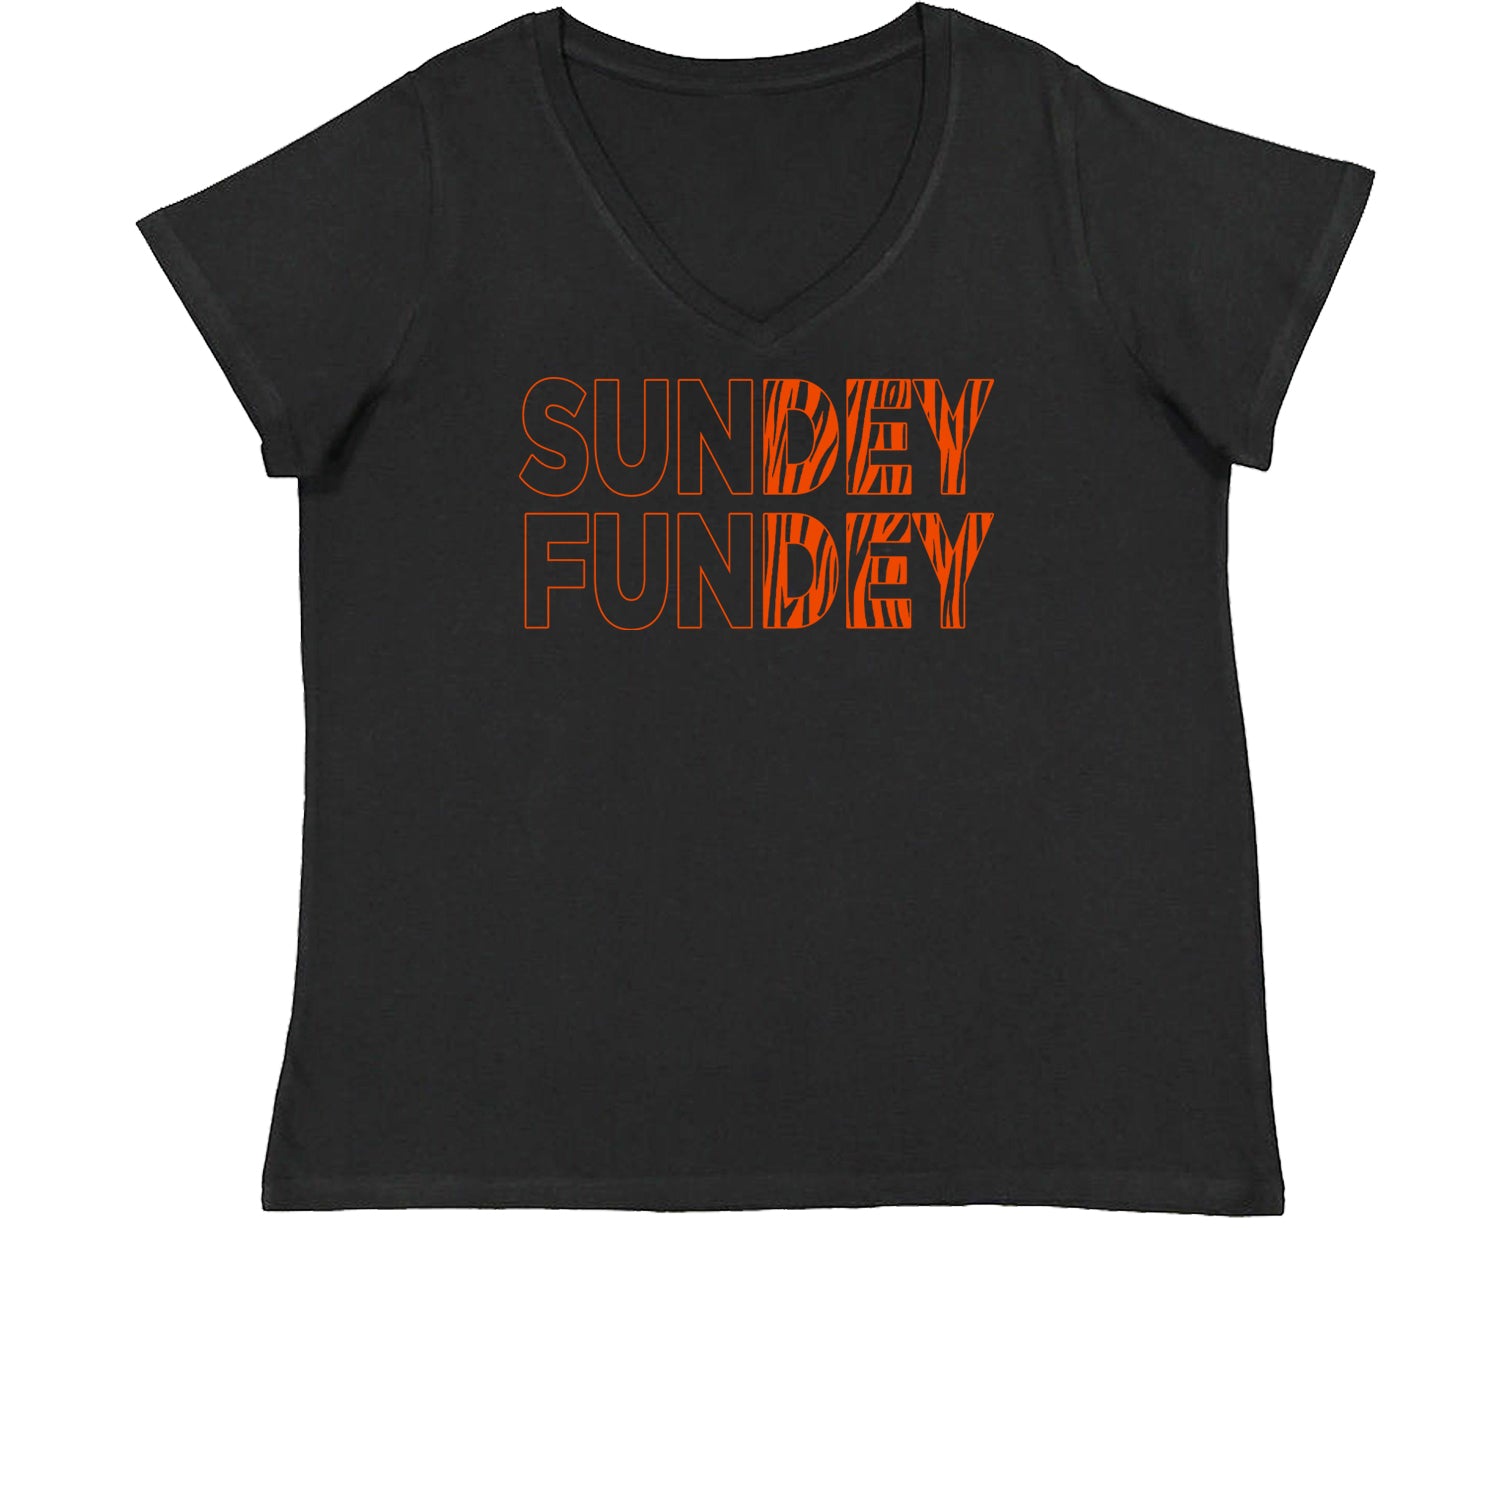 SunDEY FunDEY Sunday Funday Womens Plus Size V-Neck T-shirt ball, burrow, dey, foot, football, joe, ohio, sports, who by Expression Tees